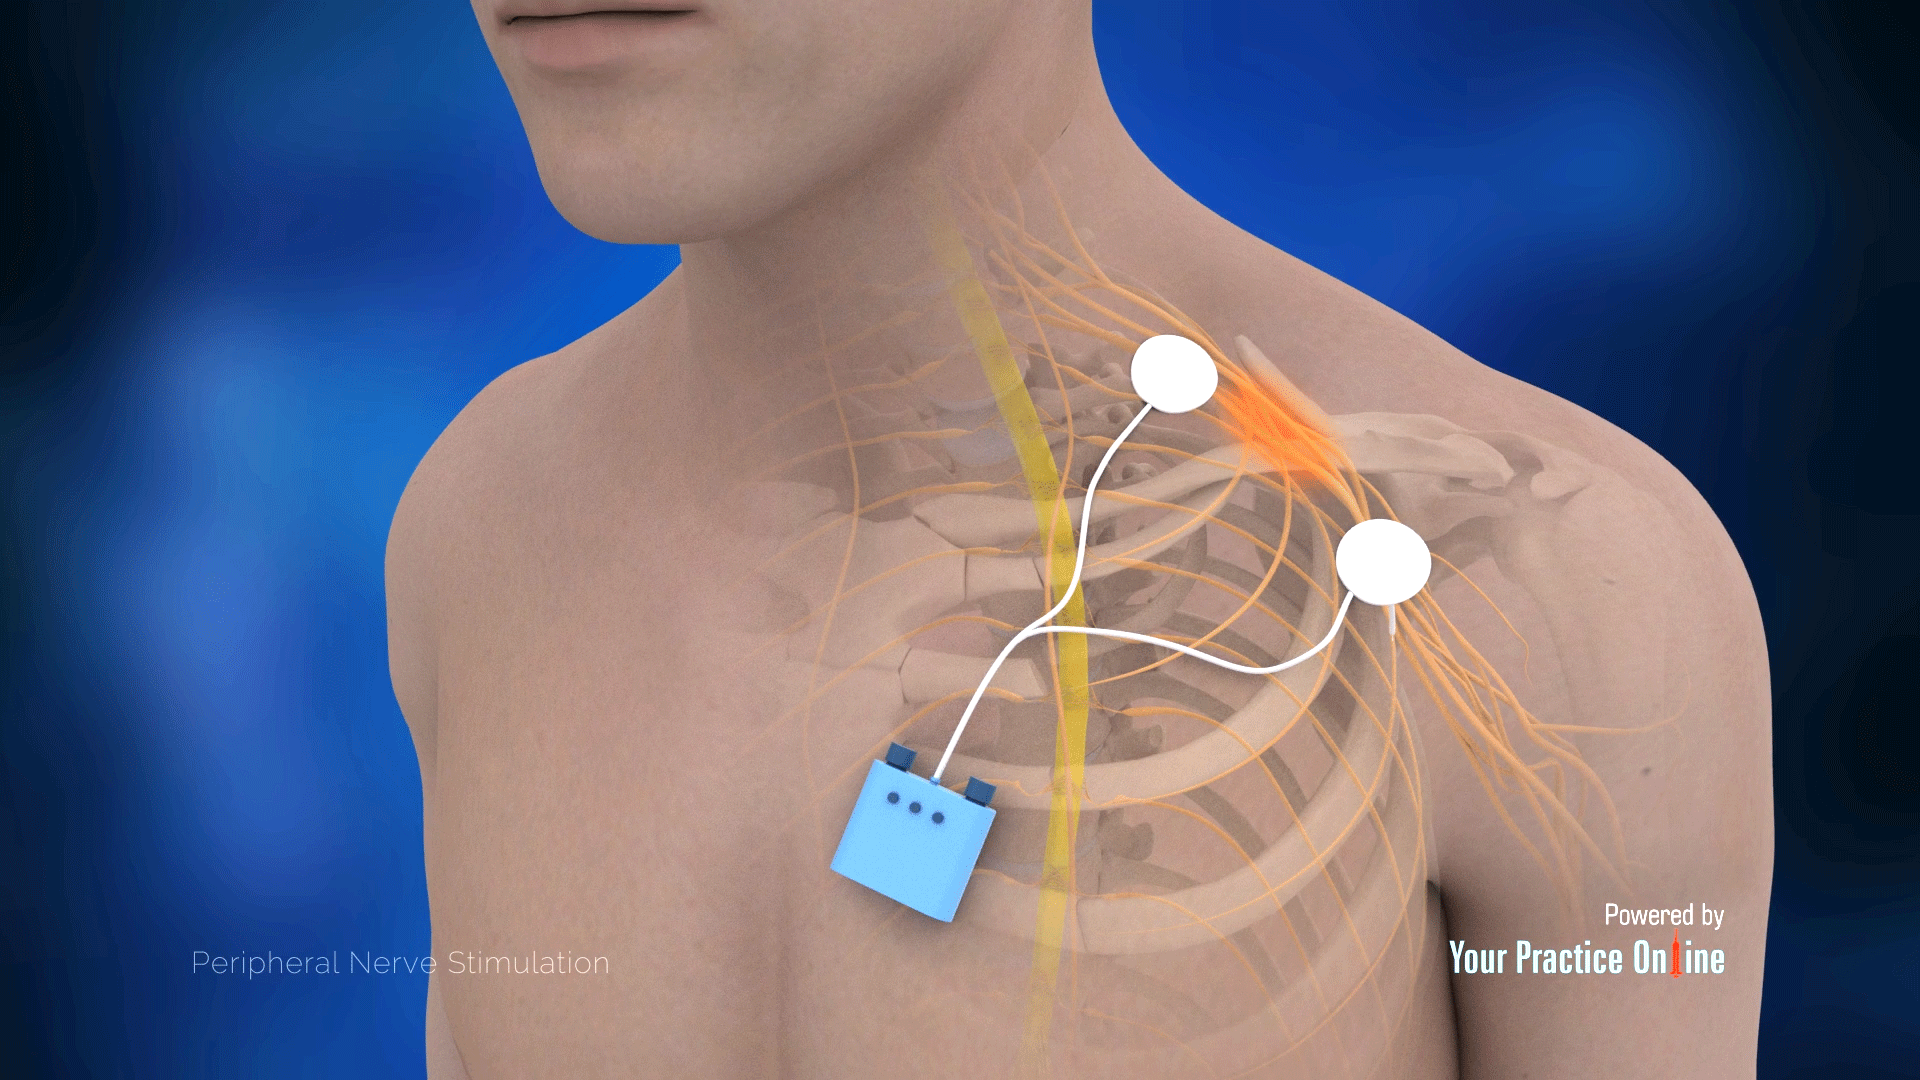 Peripheral Nerve Stimulation Video